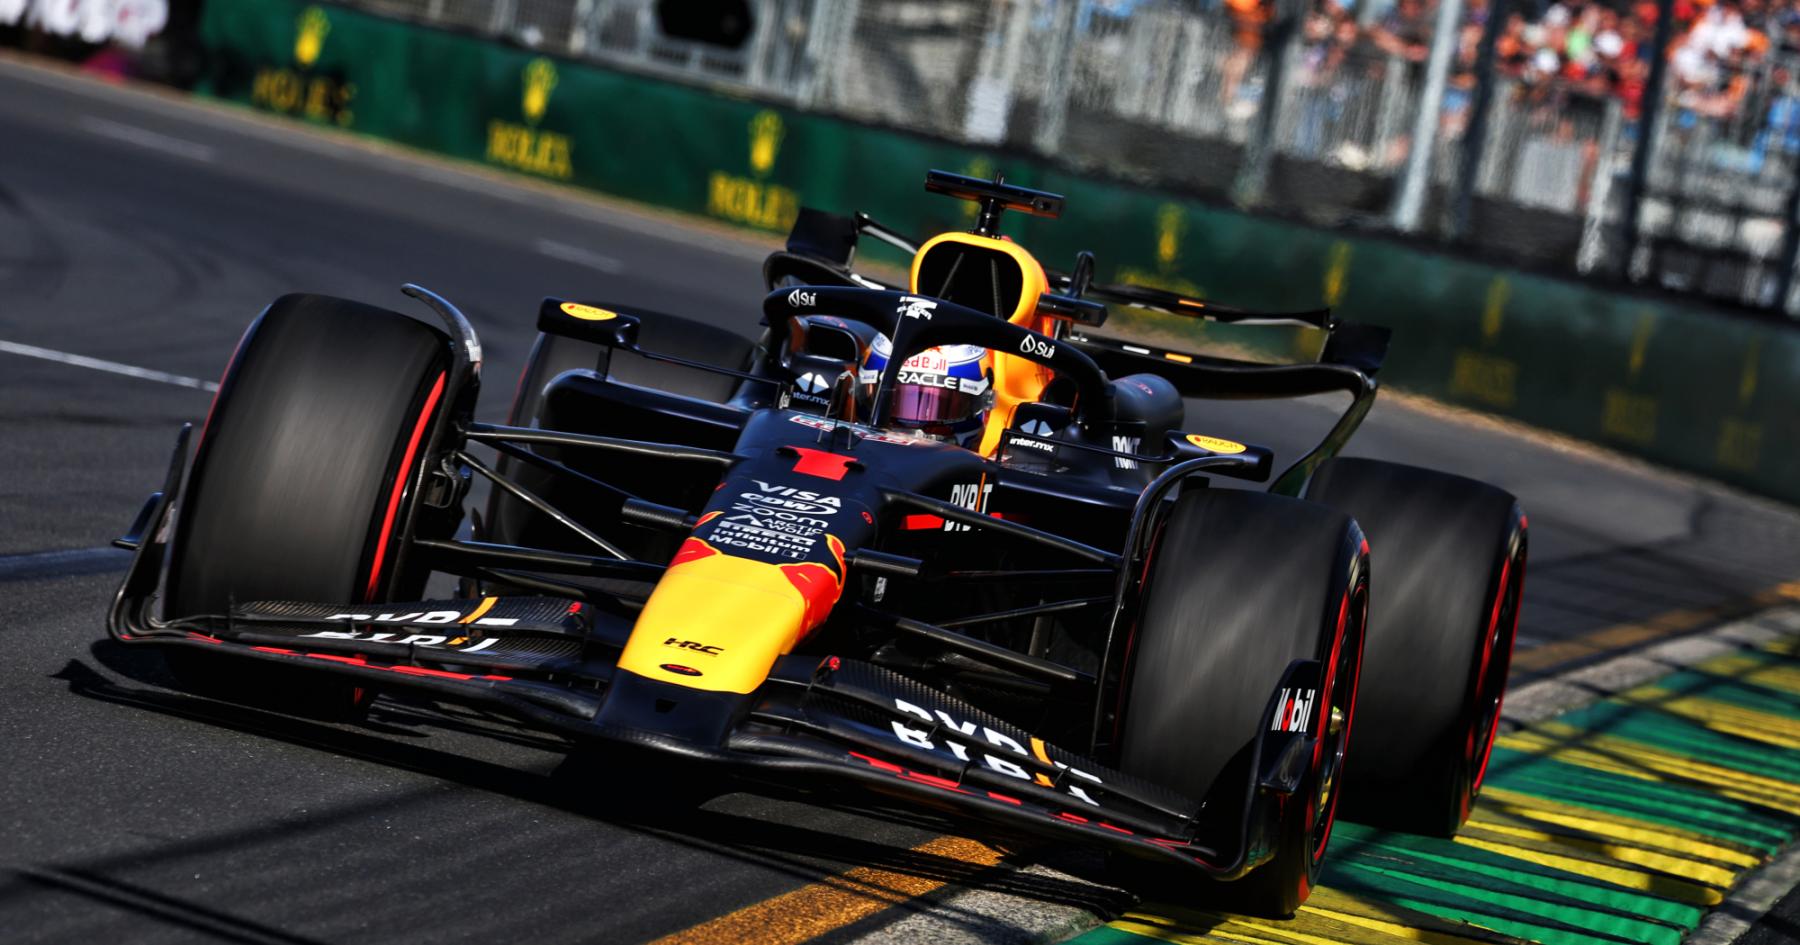 Red Bull's Bold Move: Verstappen's Error Forces Engine Change